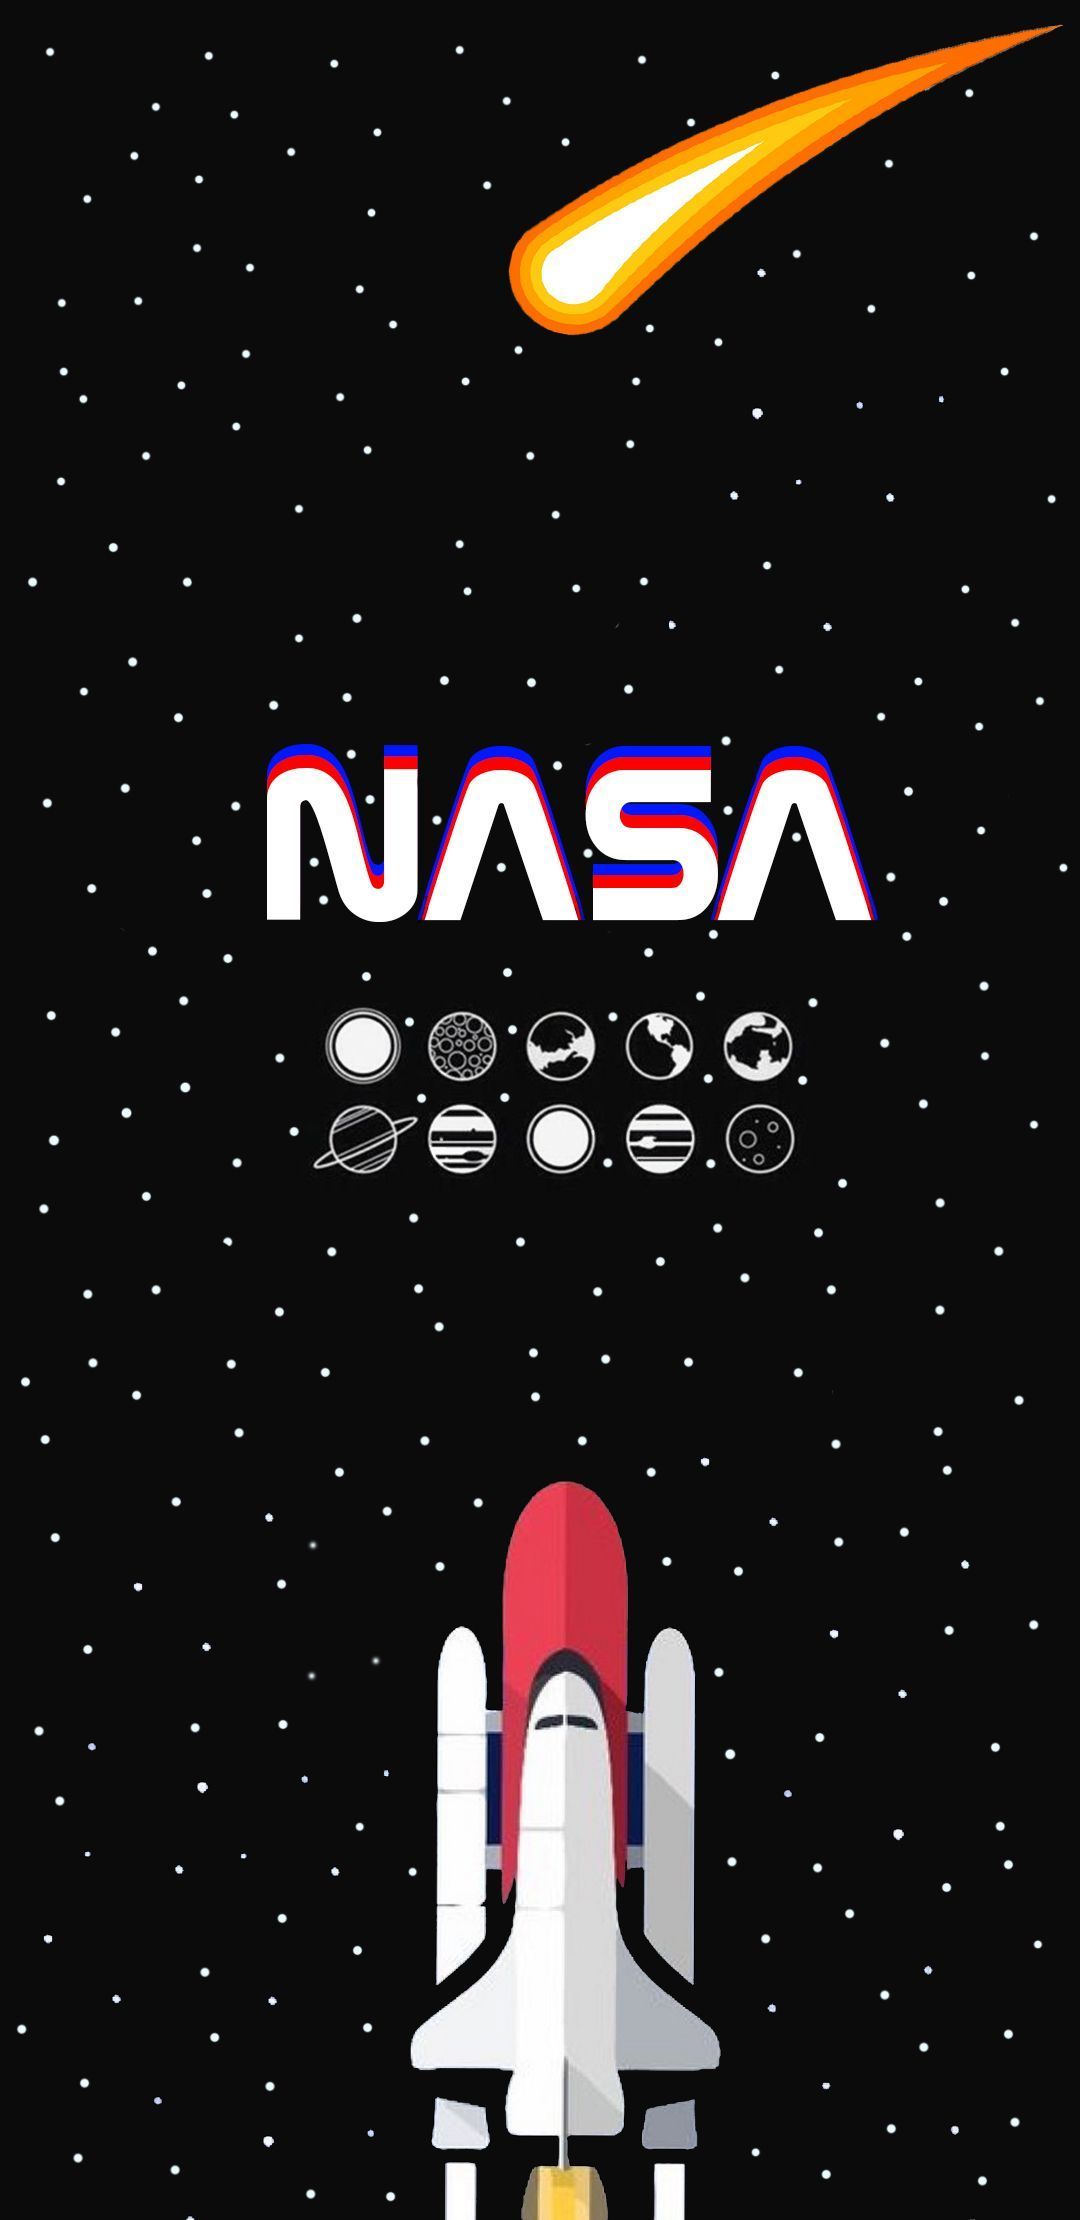 NASA wallpaper. Nasa wallpaper, Astronaut wallpaper, iPhone wallpaper nasa